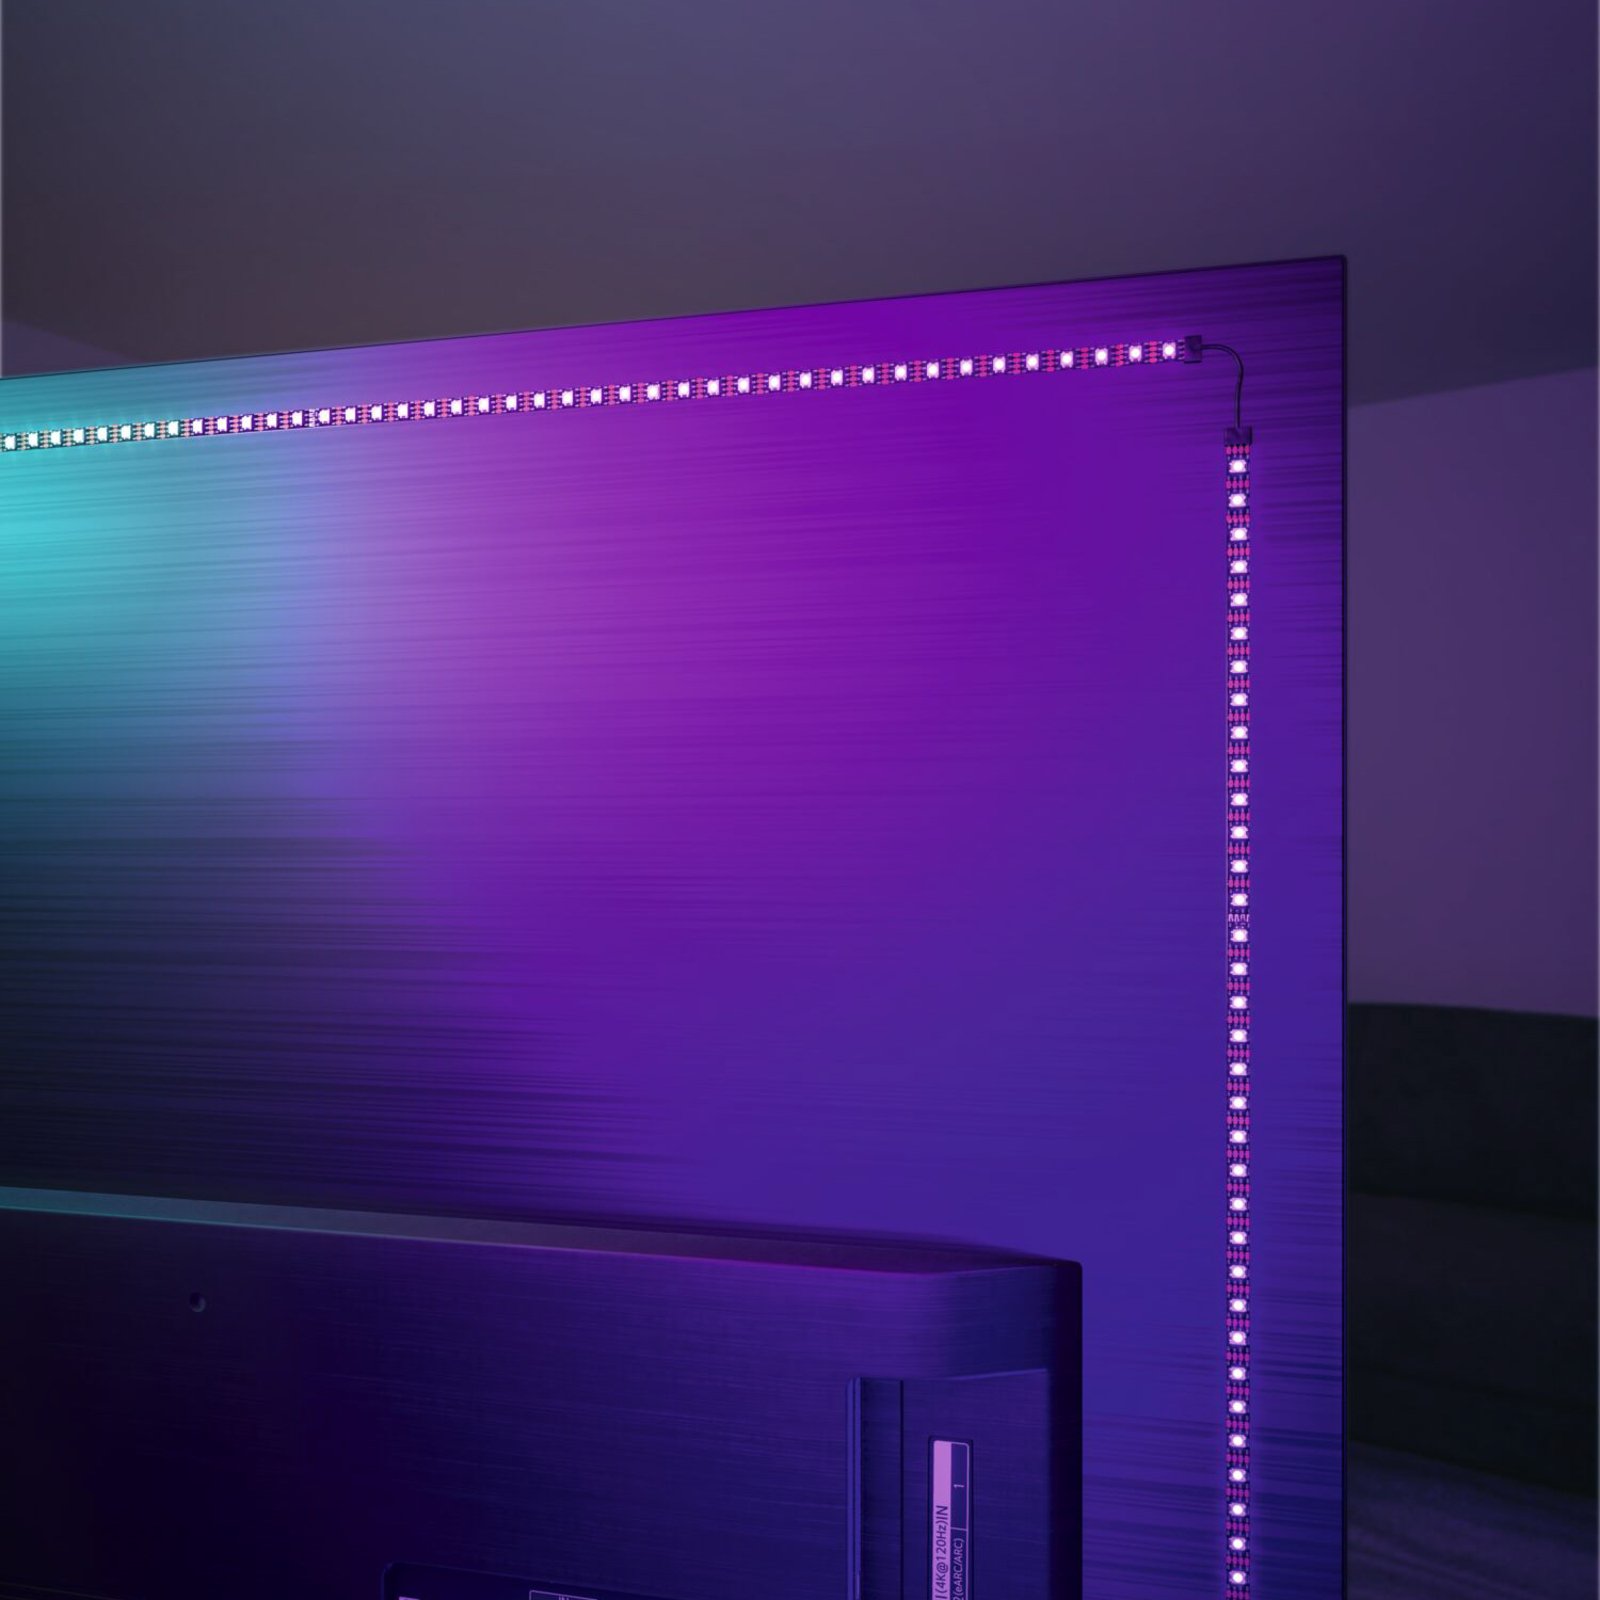 Paulmann EntertainLED LED-Strip RGB TV-Set 55 Zoll